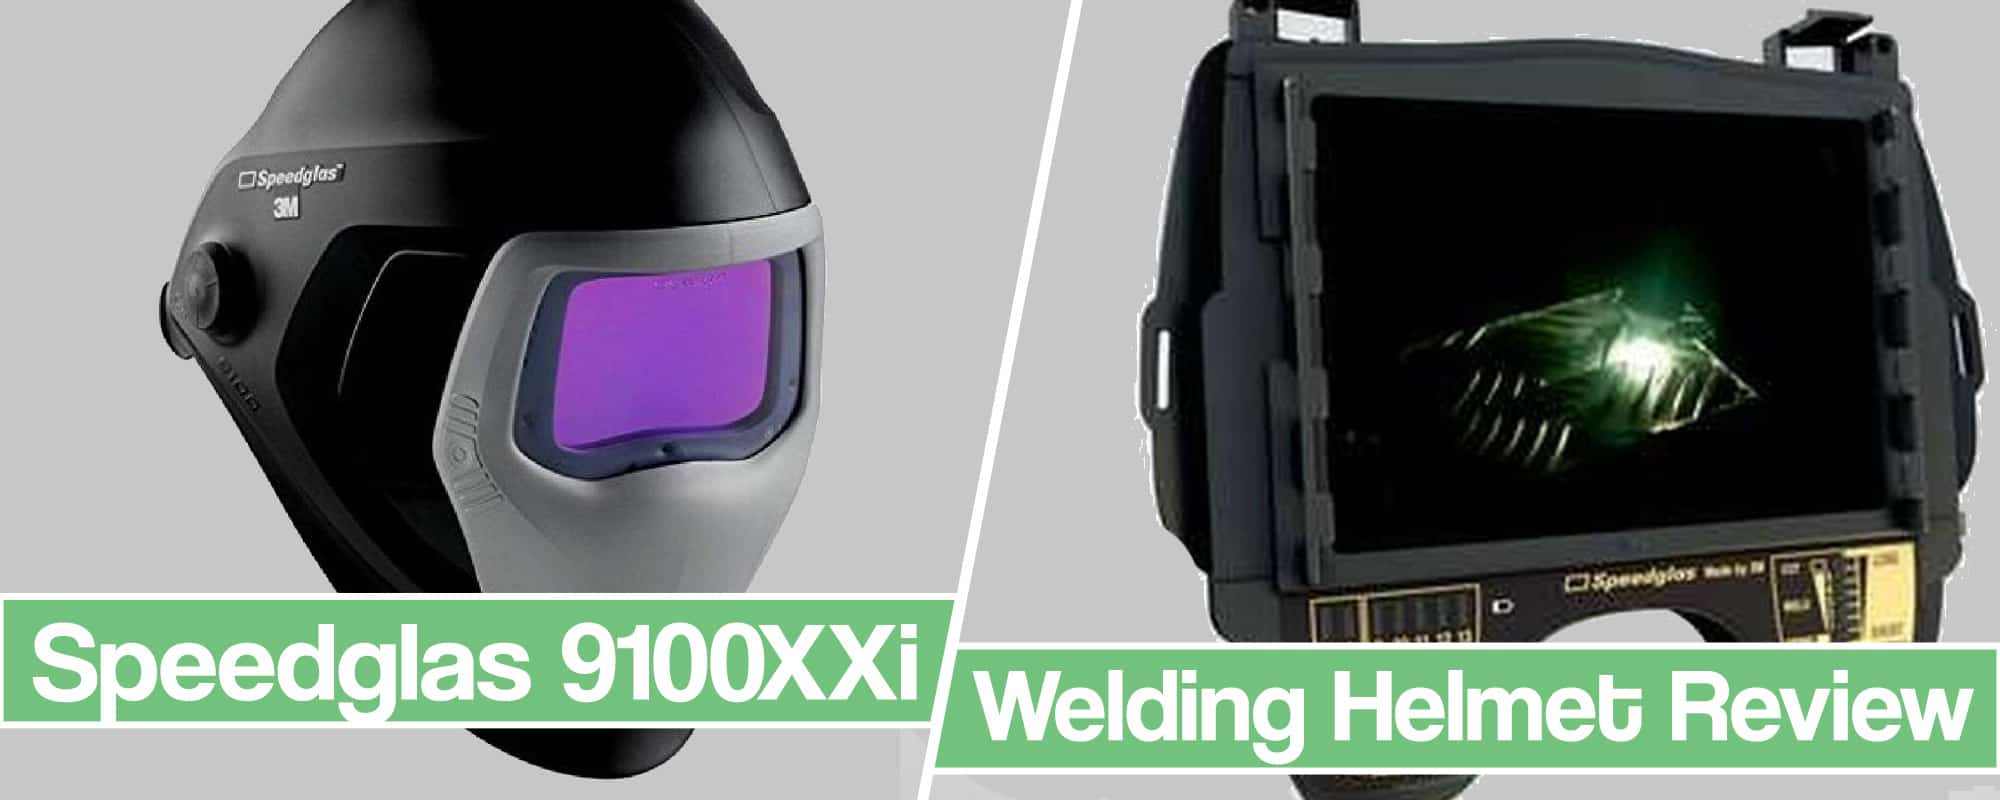 verdund Misbruik Premisse Speedglas 9100XXi Review - Most Trusted Welding Helmet in US